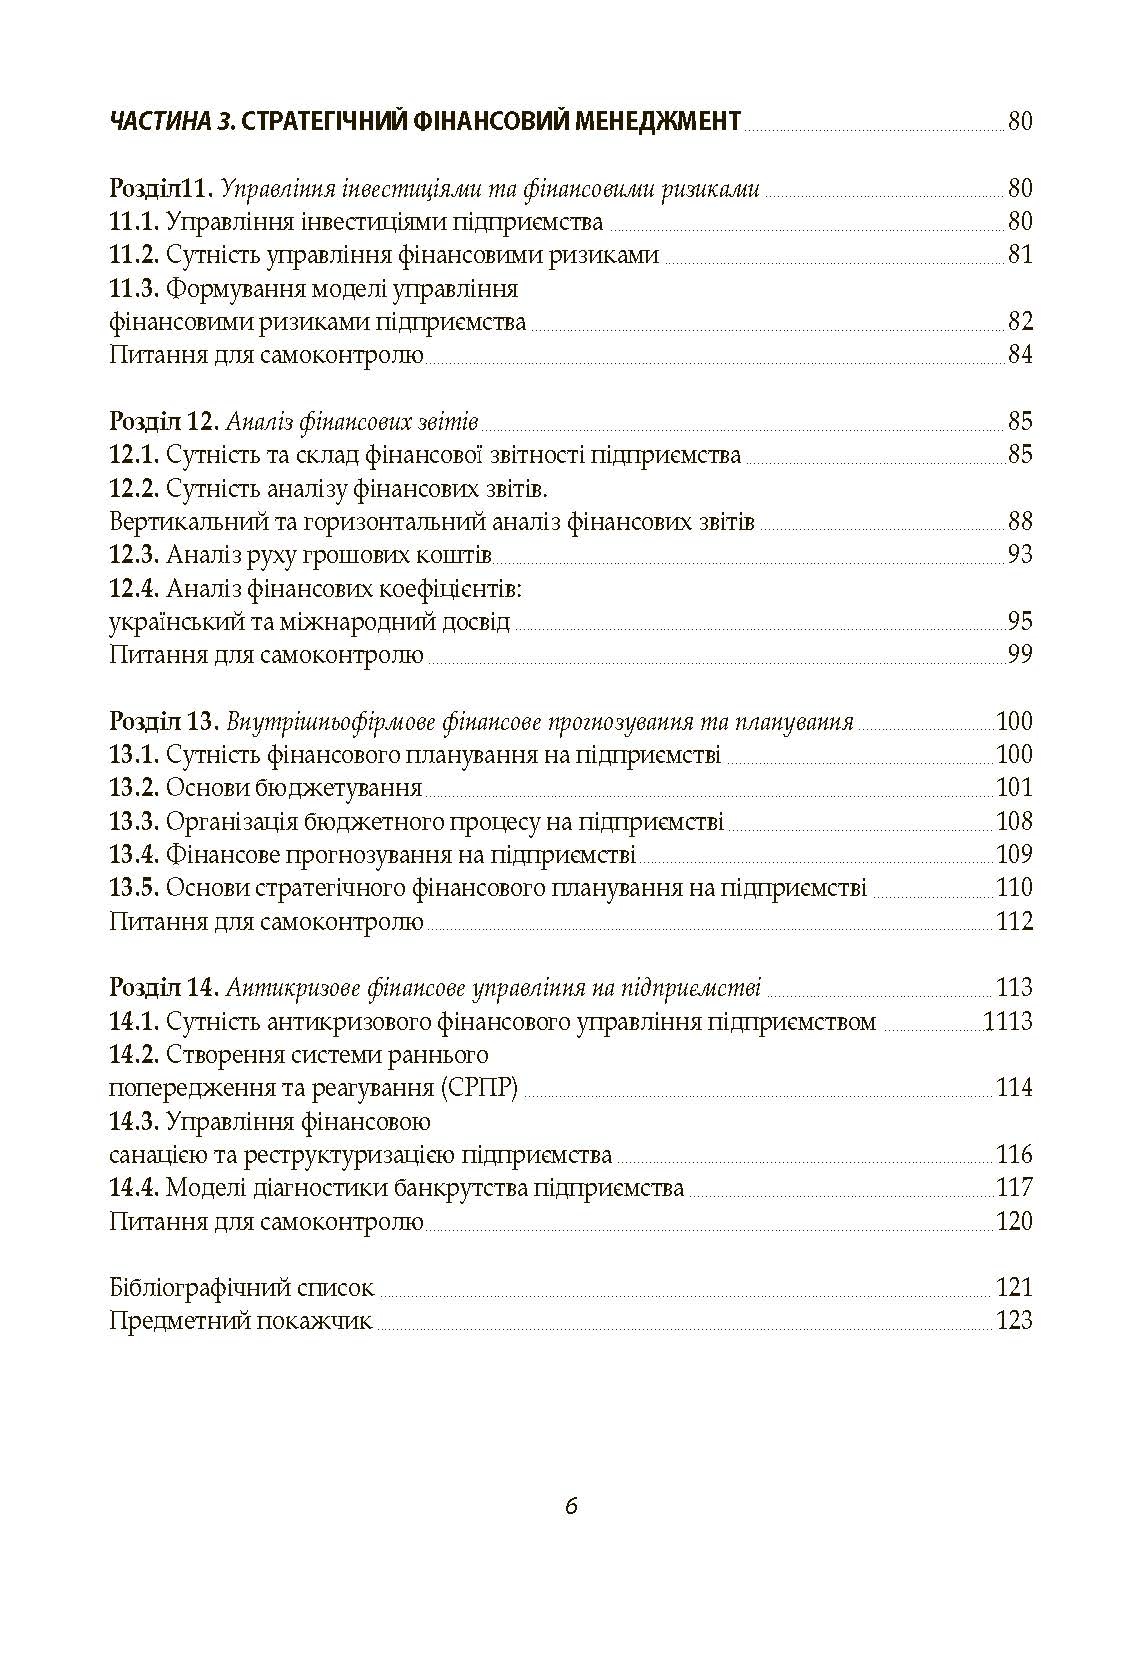 Фінансовий менеджмент. Кузнецова С.А. (2019 год)). Автор — Кузнецова С.А.. 